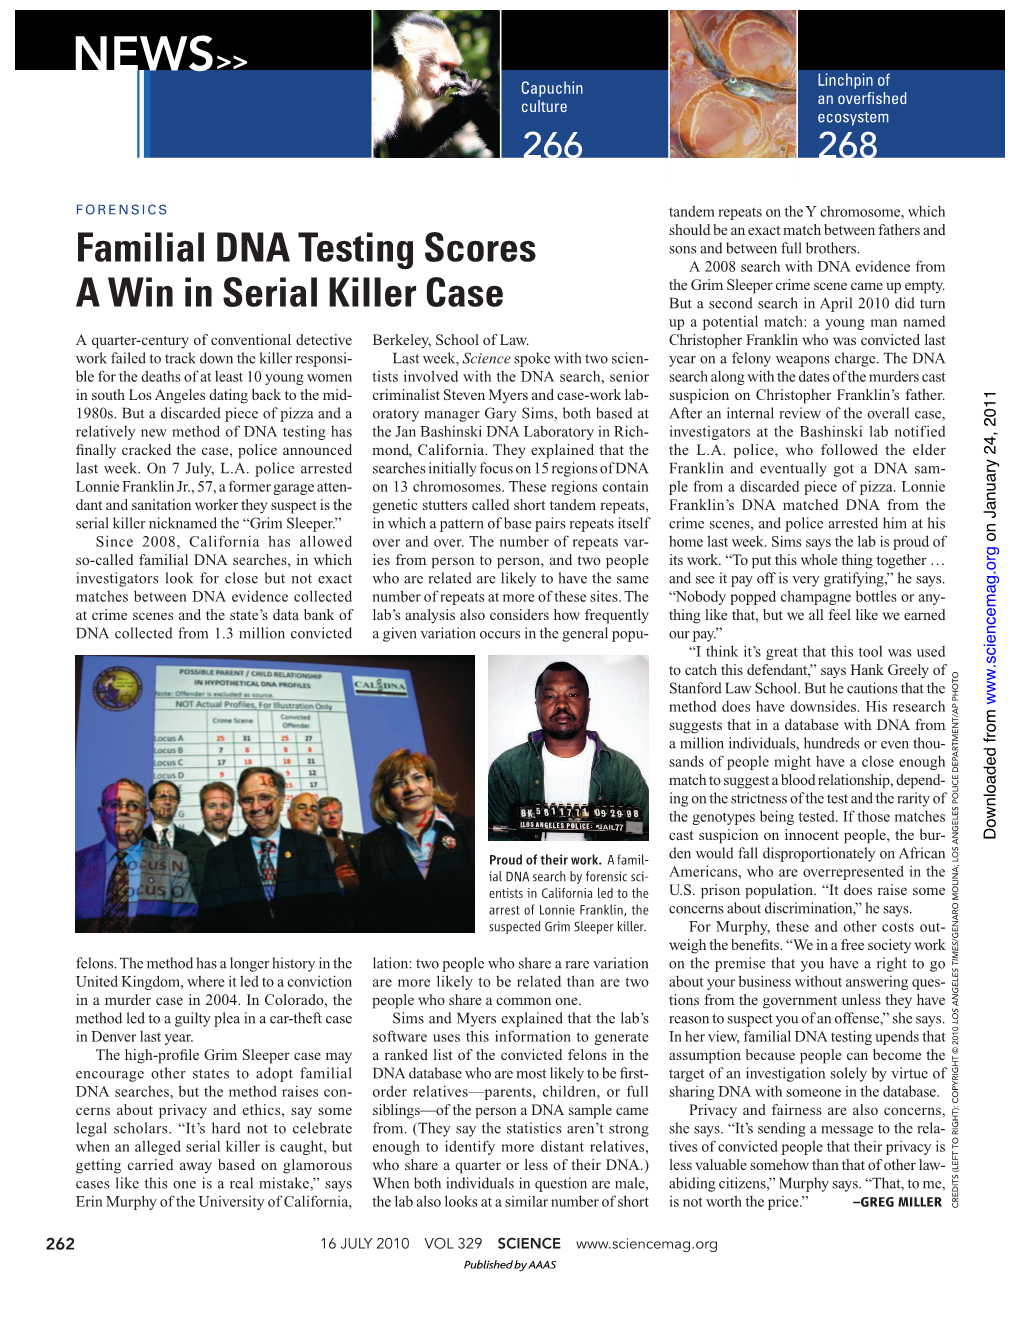 Familial DNA Testing Scores a Win in Serial Killer Case